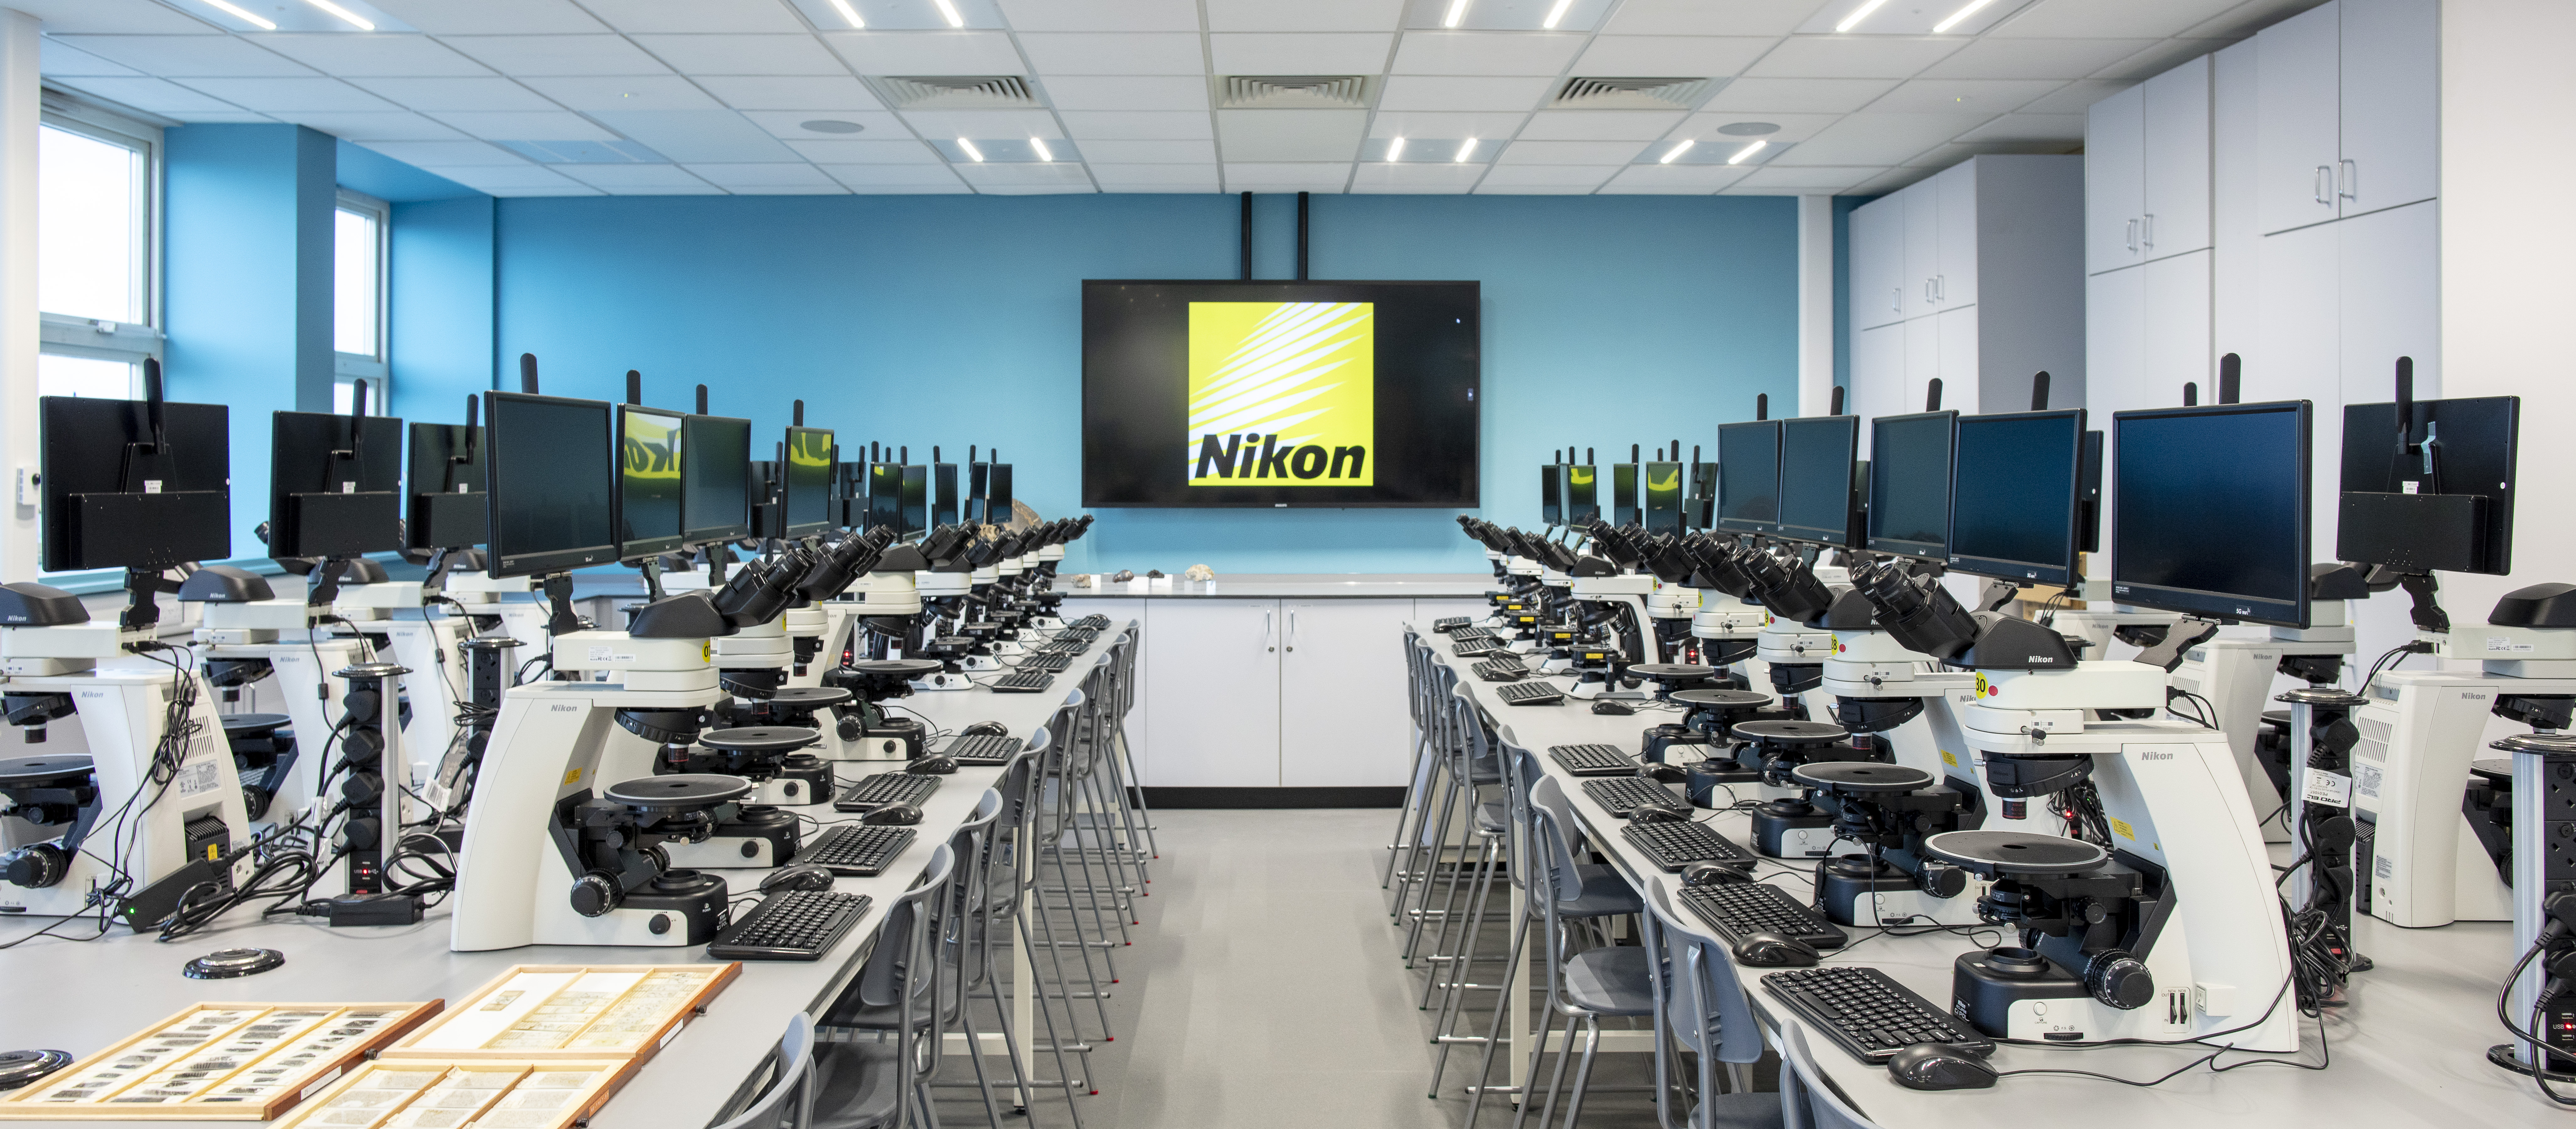 Nikon teaching microscopes o enhance student learning in universities